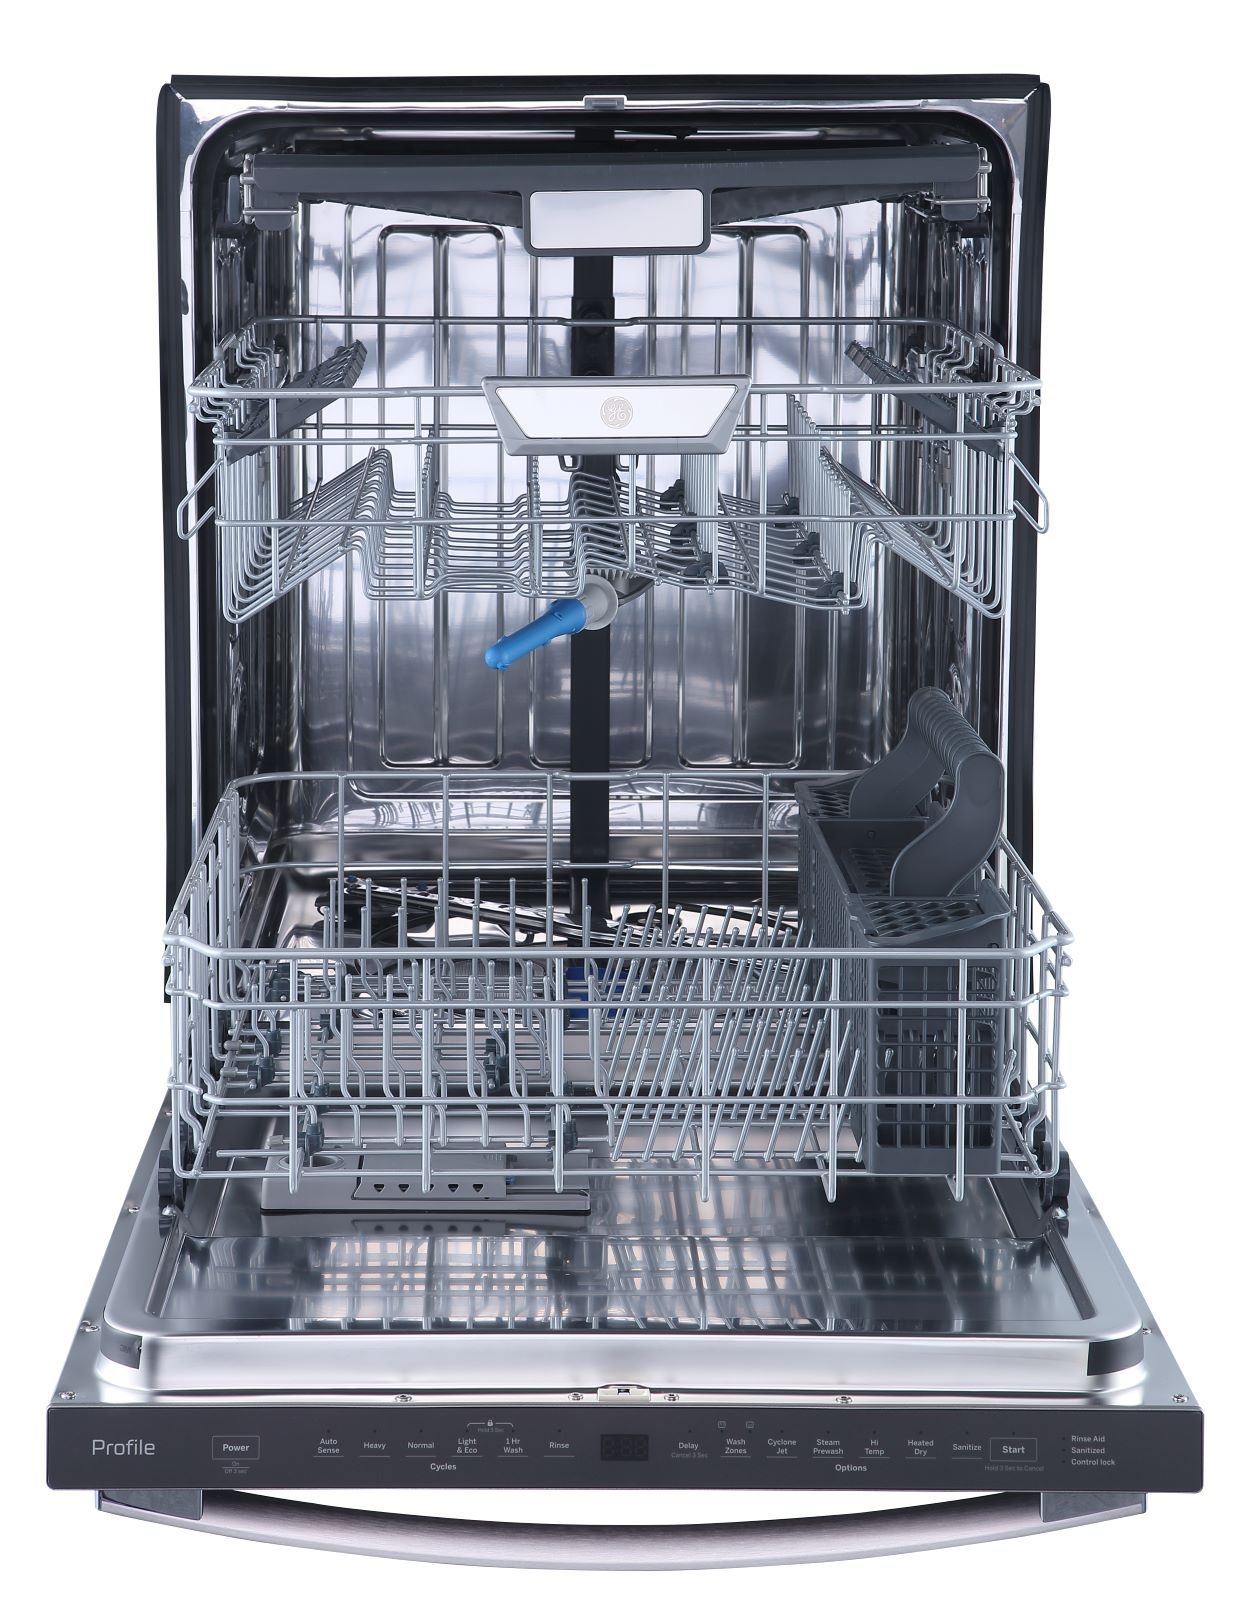 GE Profile Slate 24" Built-In Top Control Dishwasher - PBT865SMPES